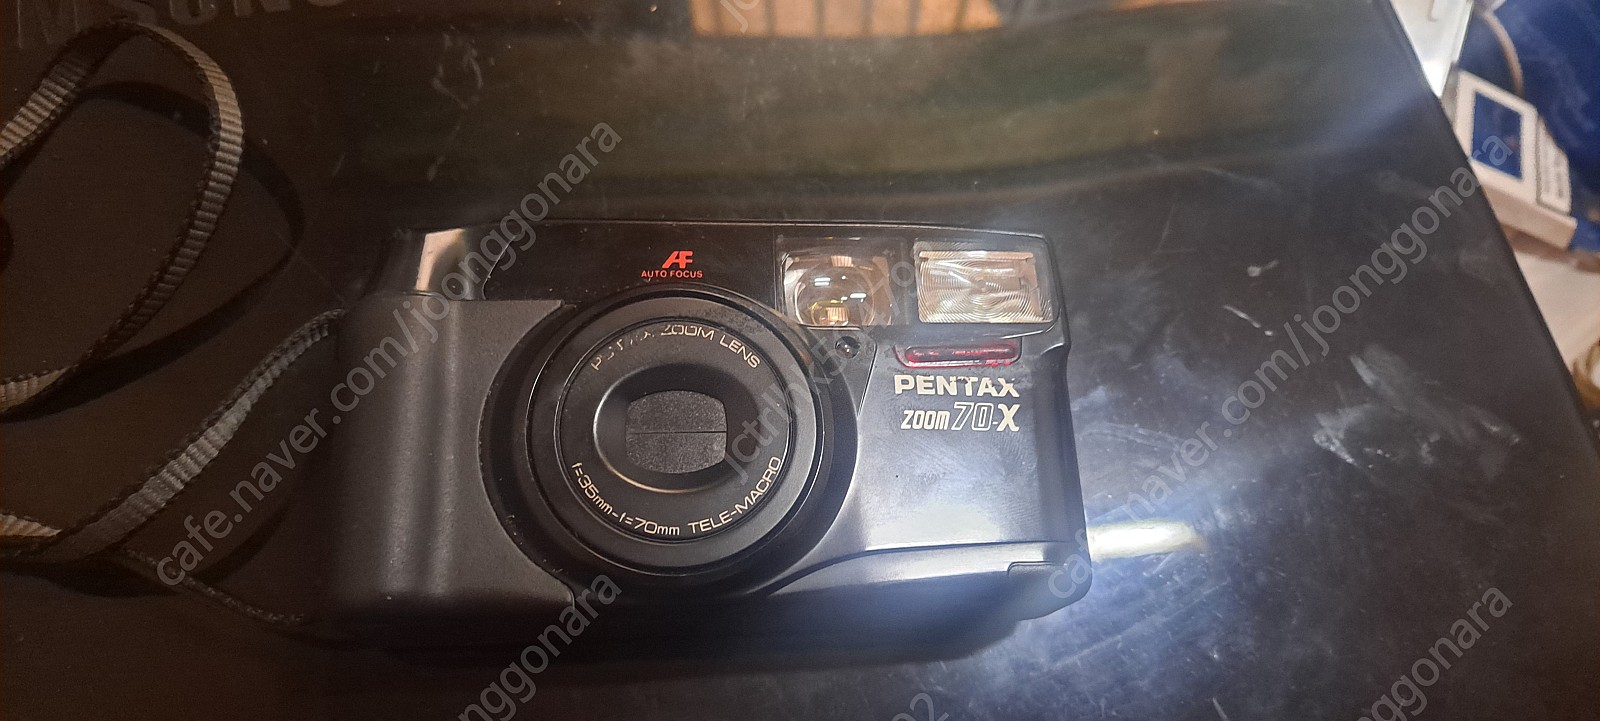 pentax zoom 70x와 OLYMPUS TRIP XB3 필름 카메라 두개 팝니다.